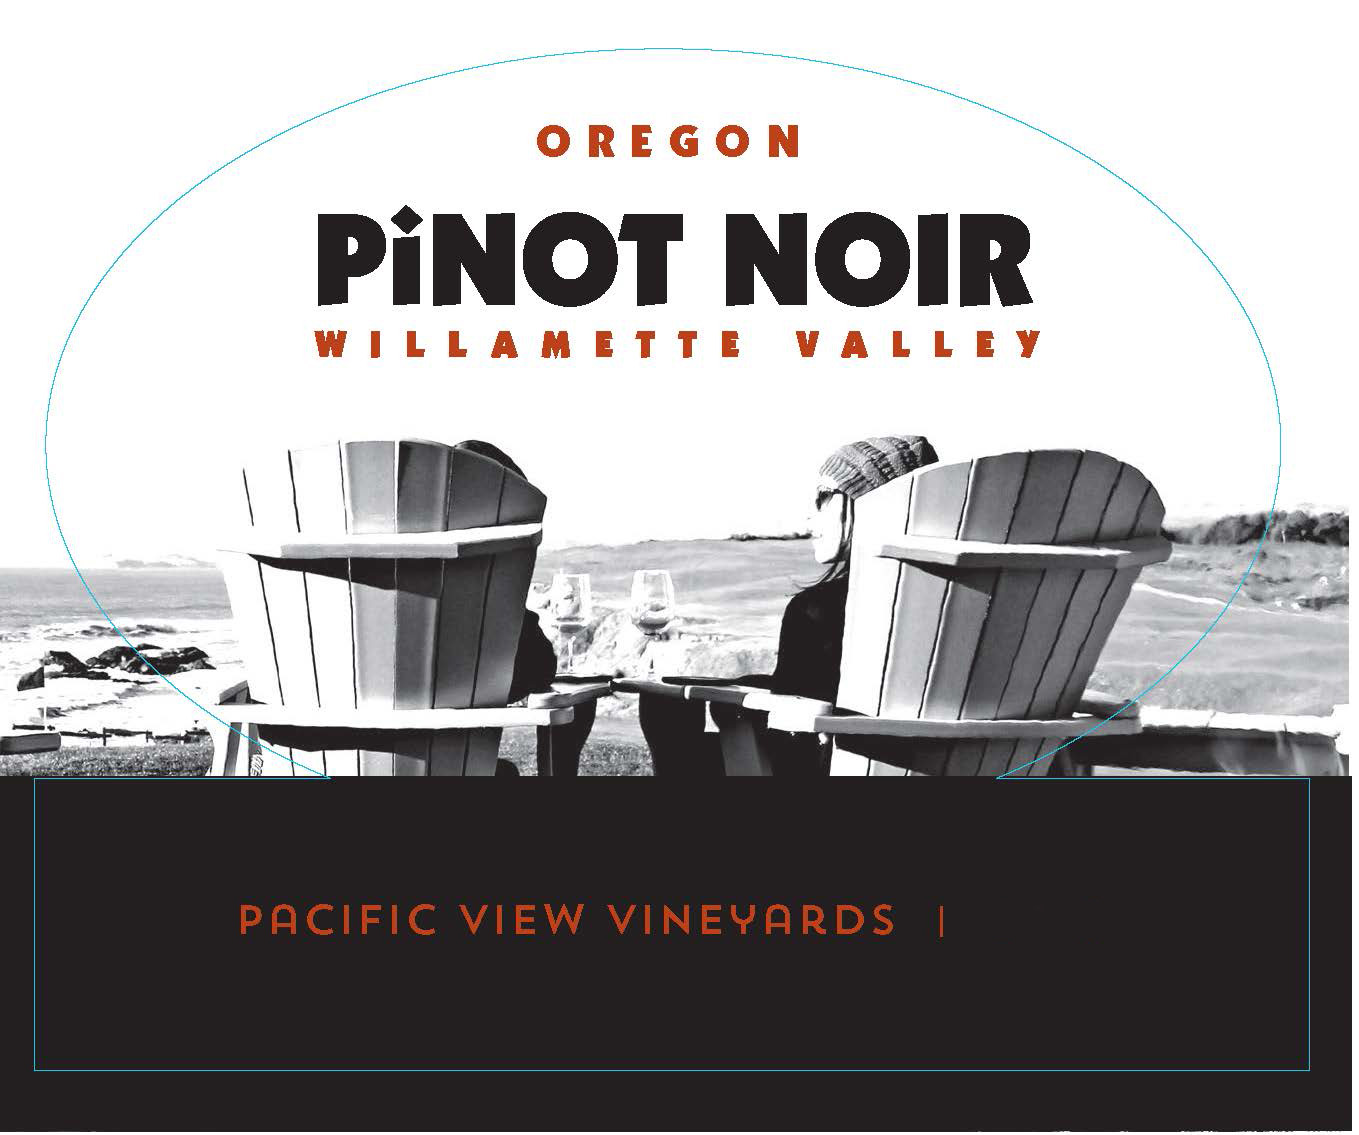 Pacific View Vineyards Willamette Valley Pinot Noir label